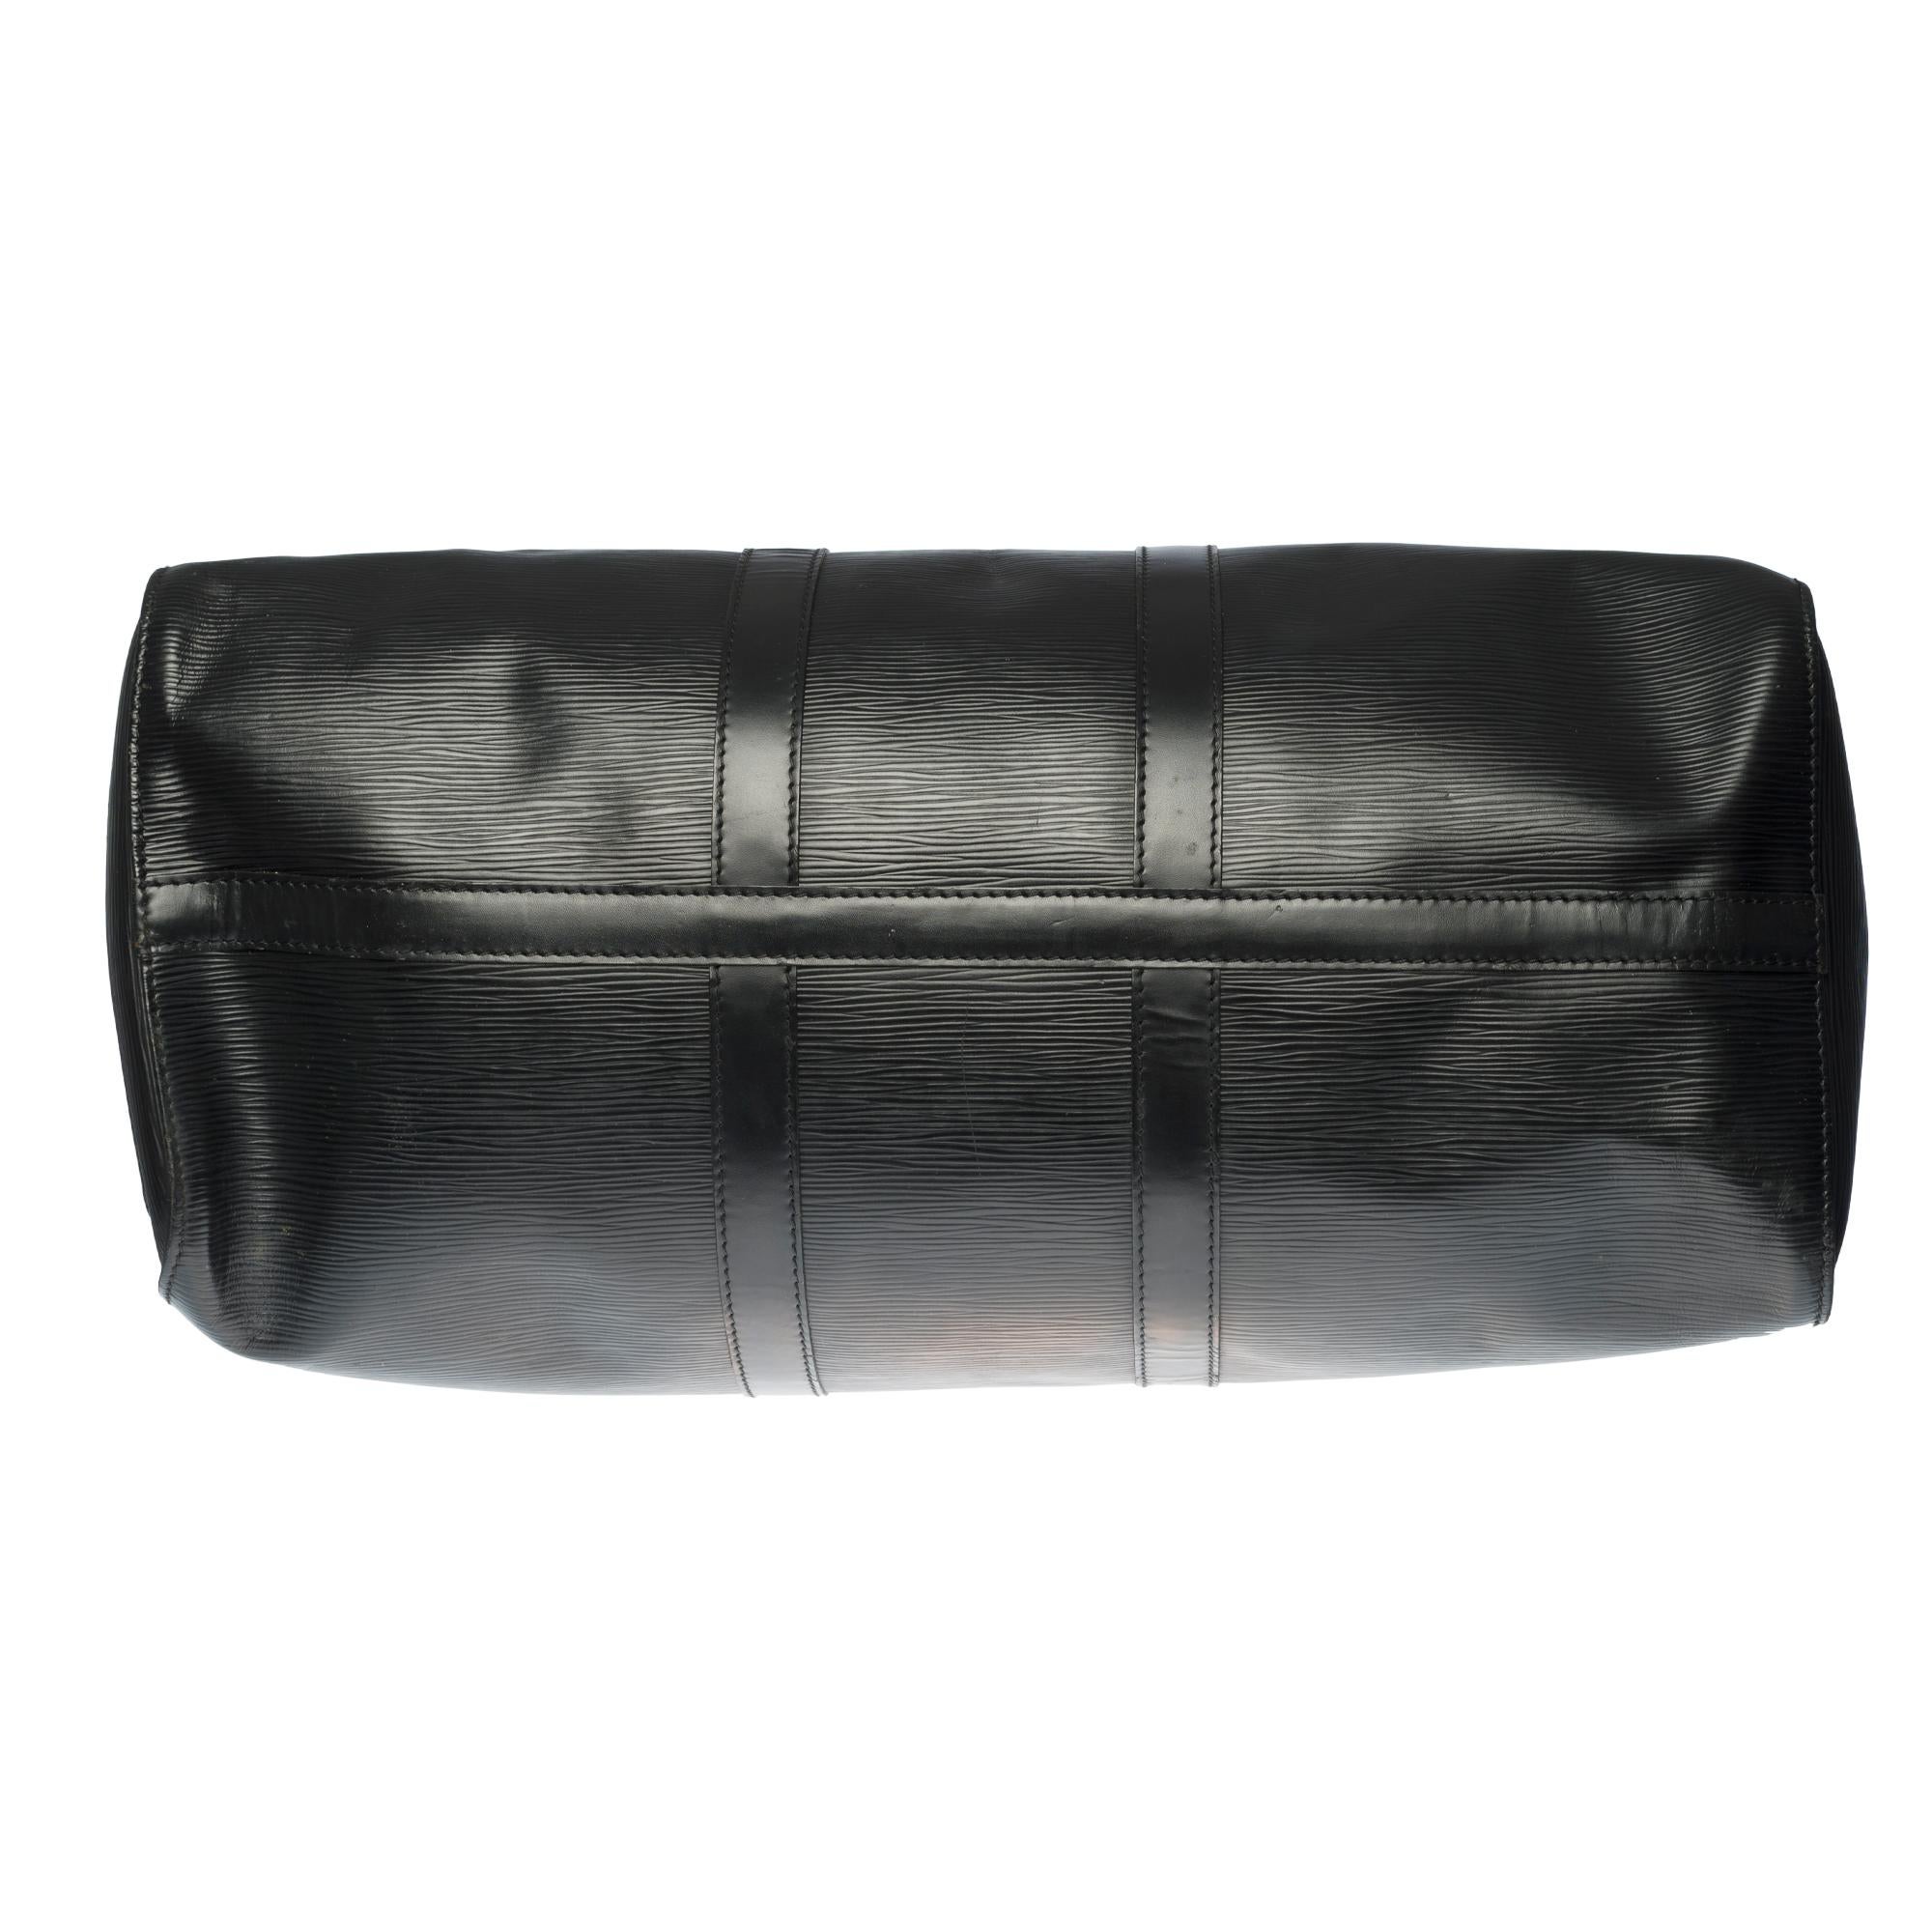 Louis Vuitton Keepall 45 Travel bag in black épi leather 3